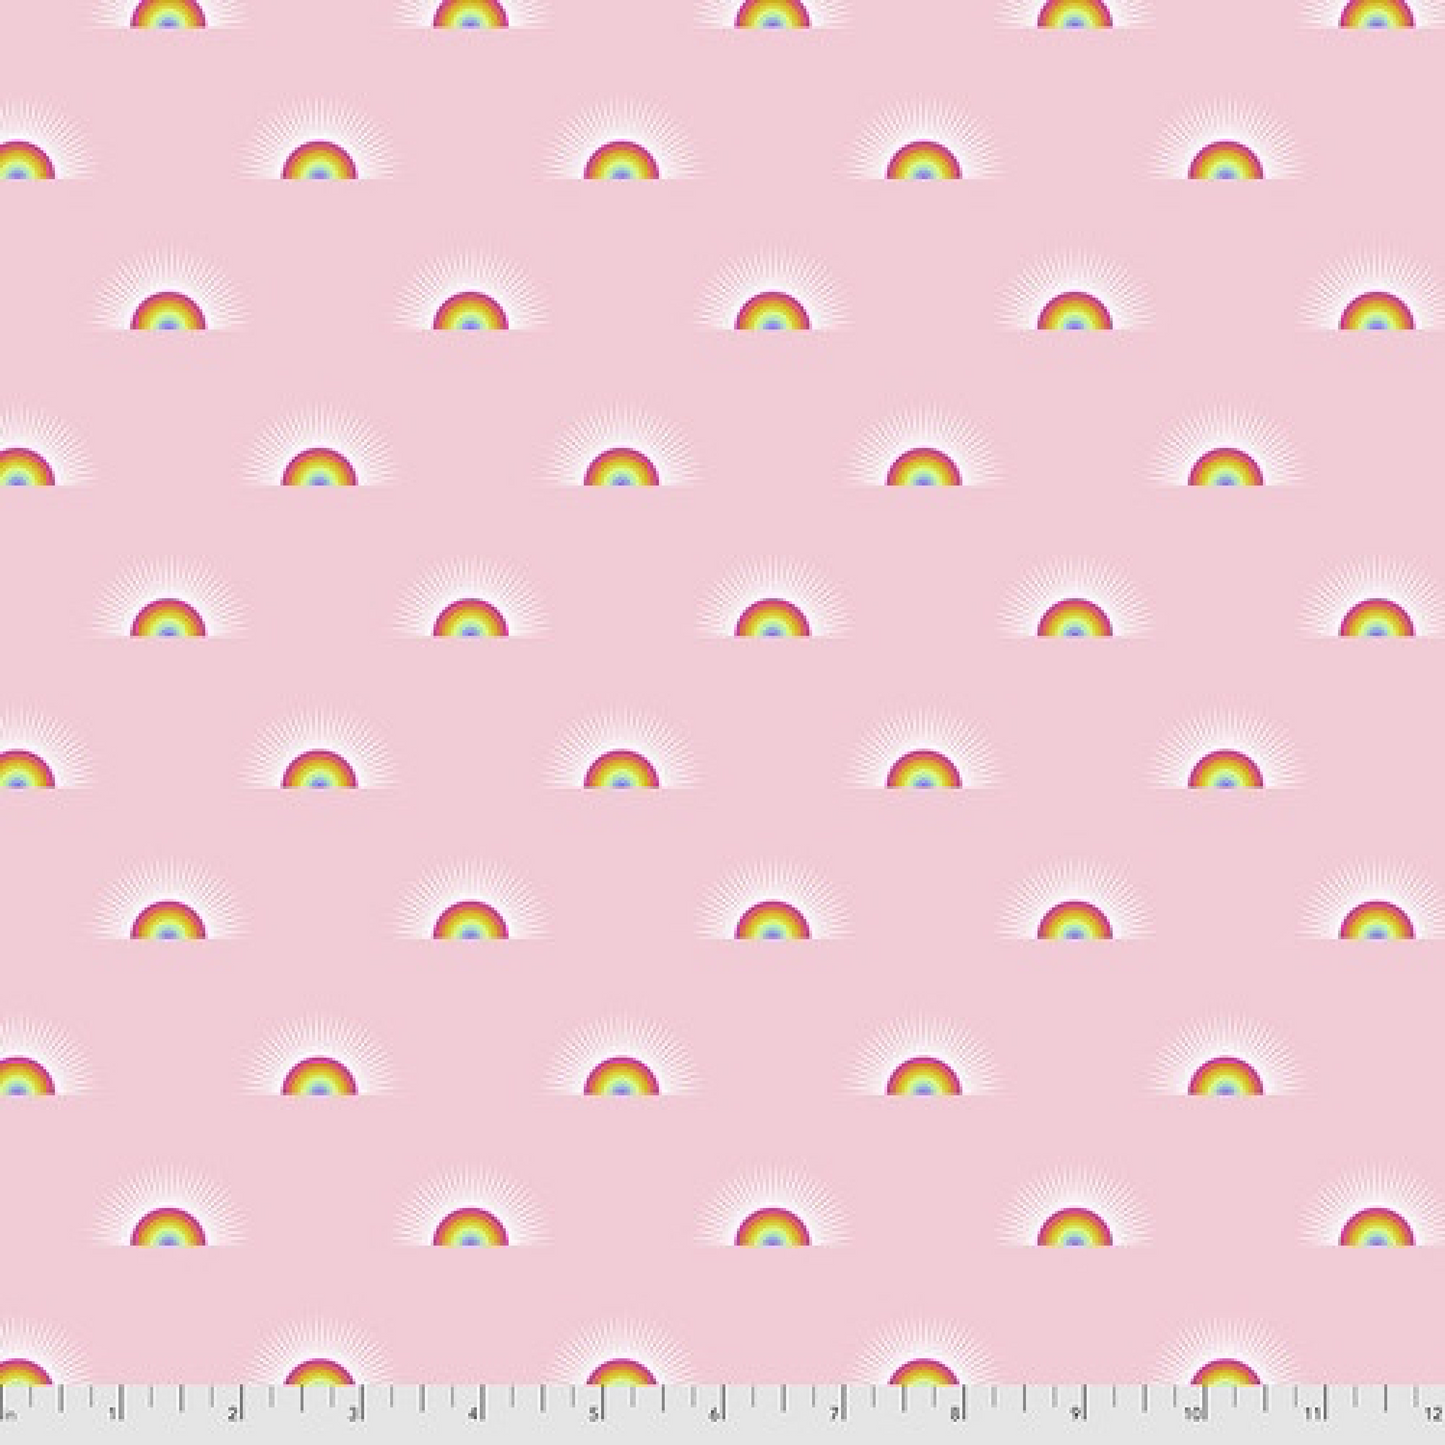 Tula Pink-Daydreamer-Design Roll